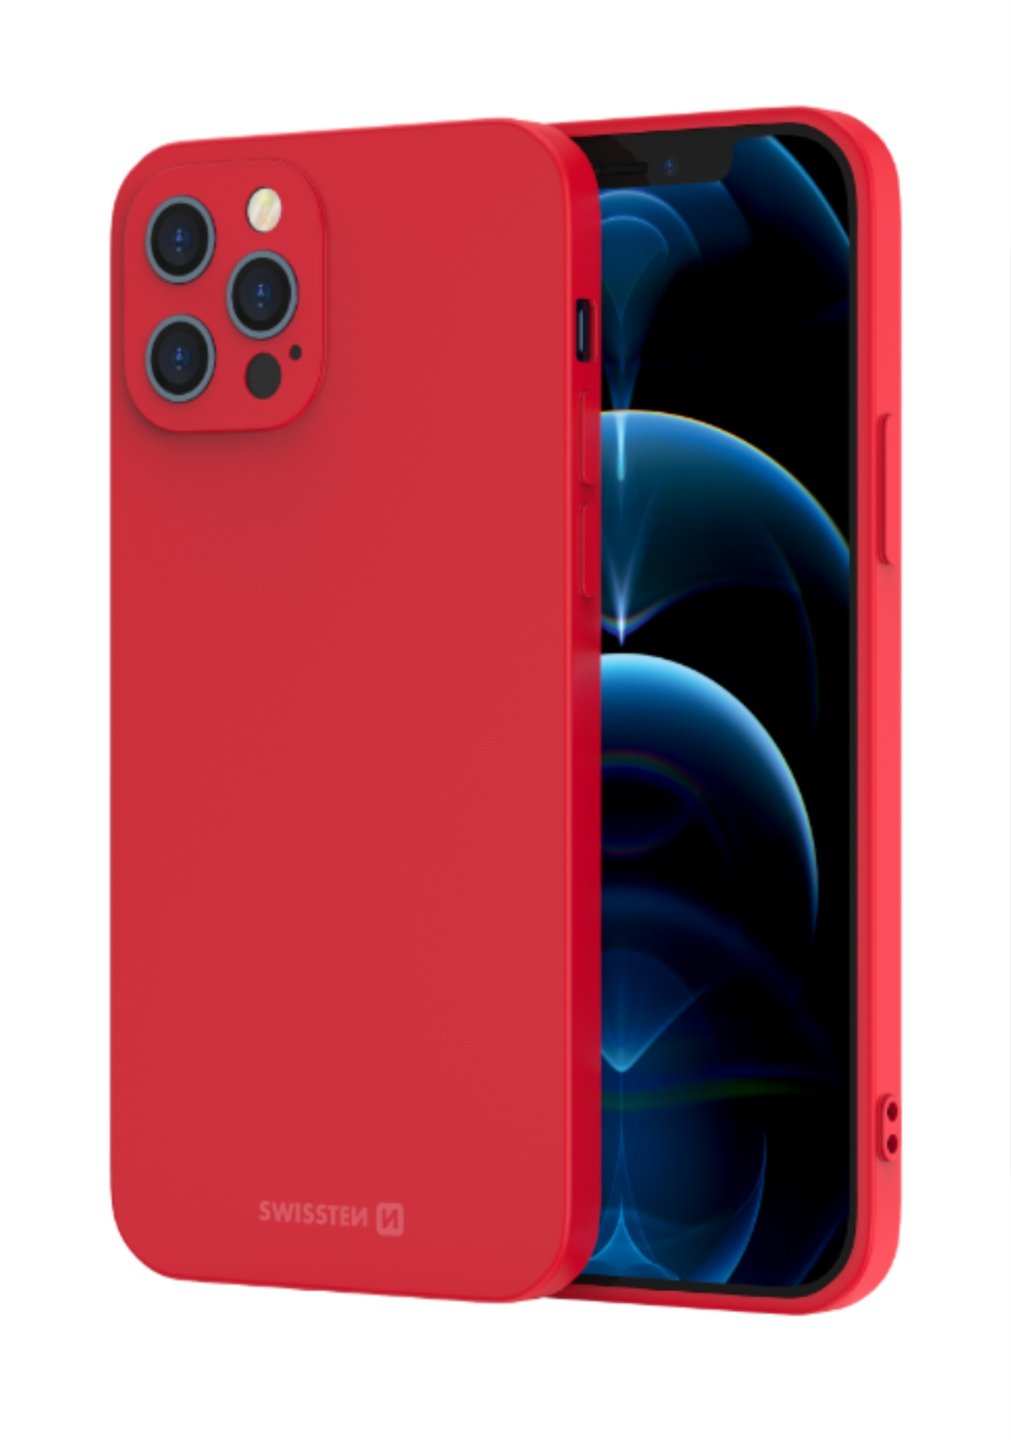 Swissten iPhone X/iPhone XS Soft Joy Case - 34500113 - Red